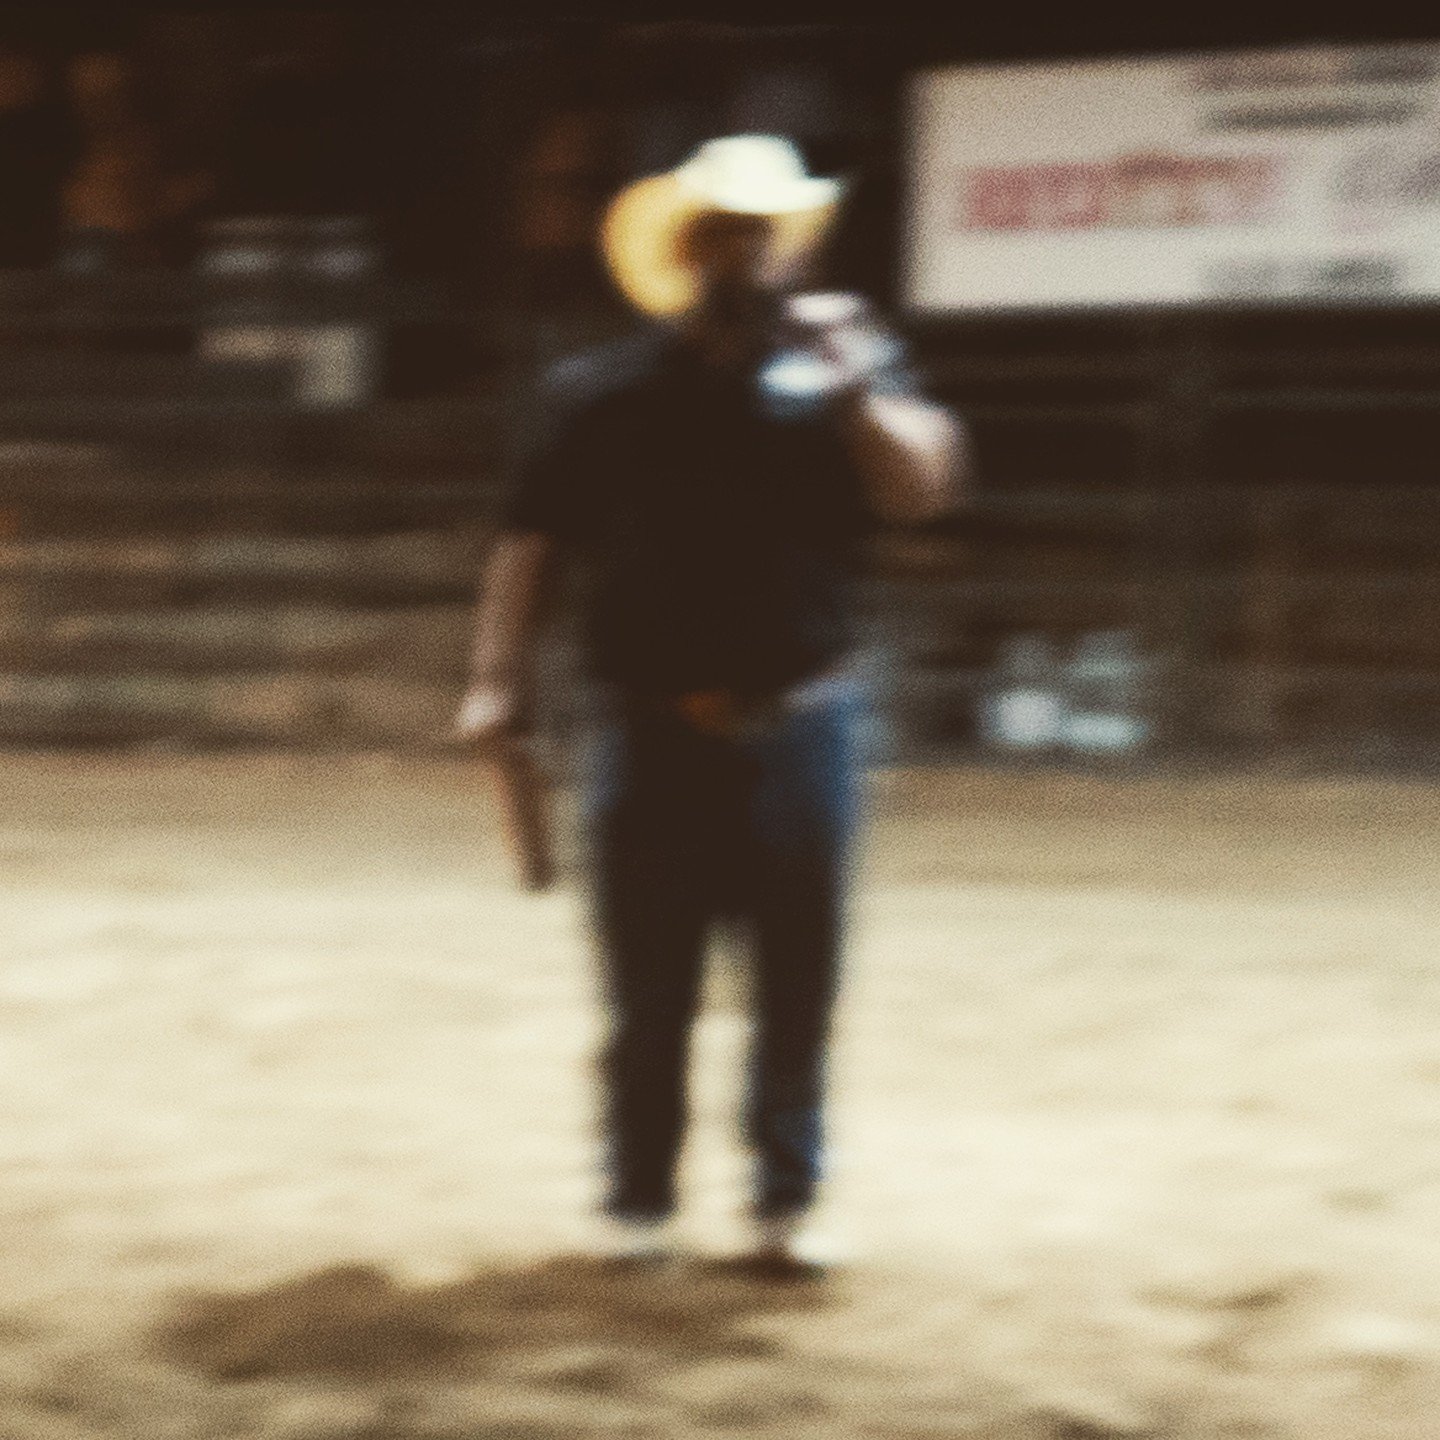 Bull Riding announcer.